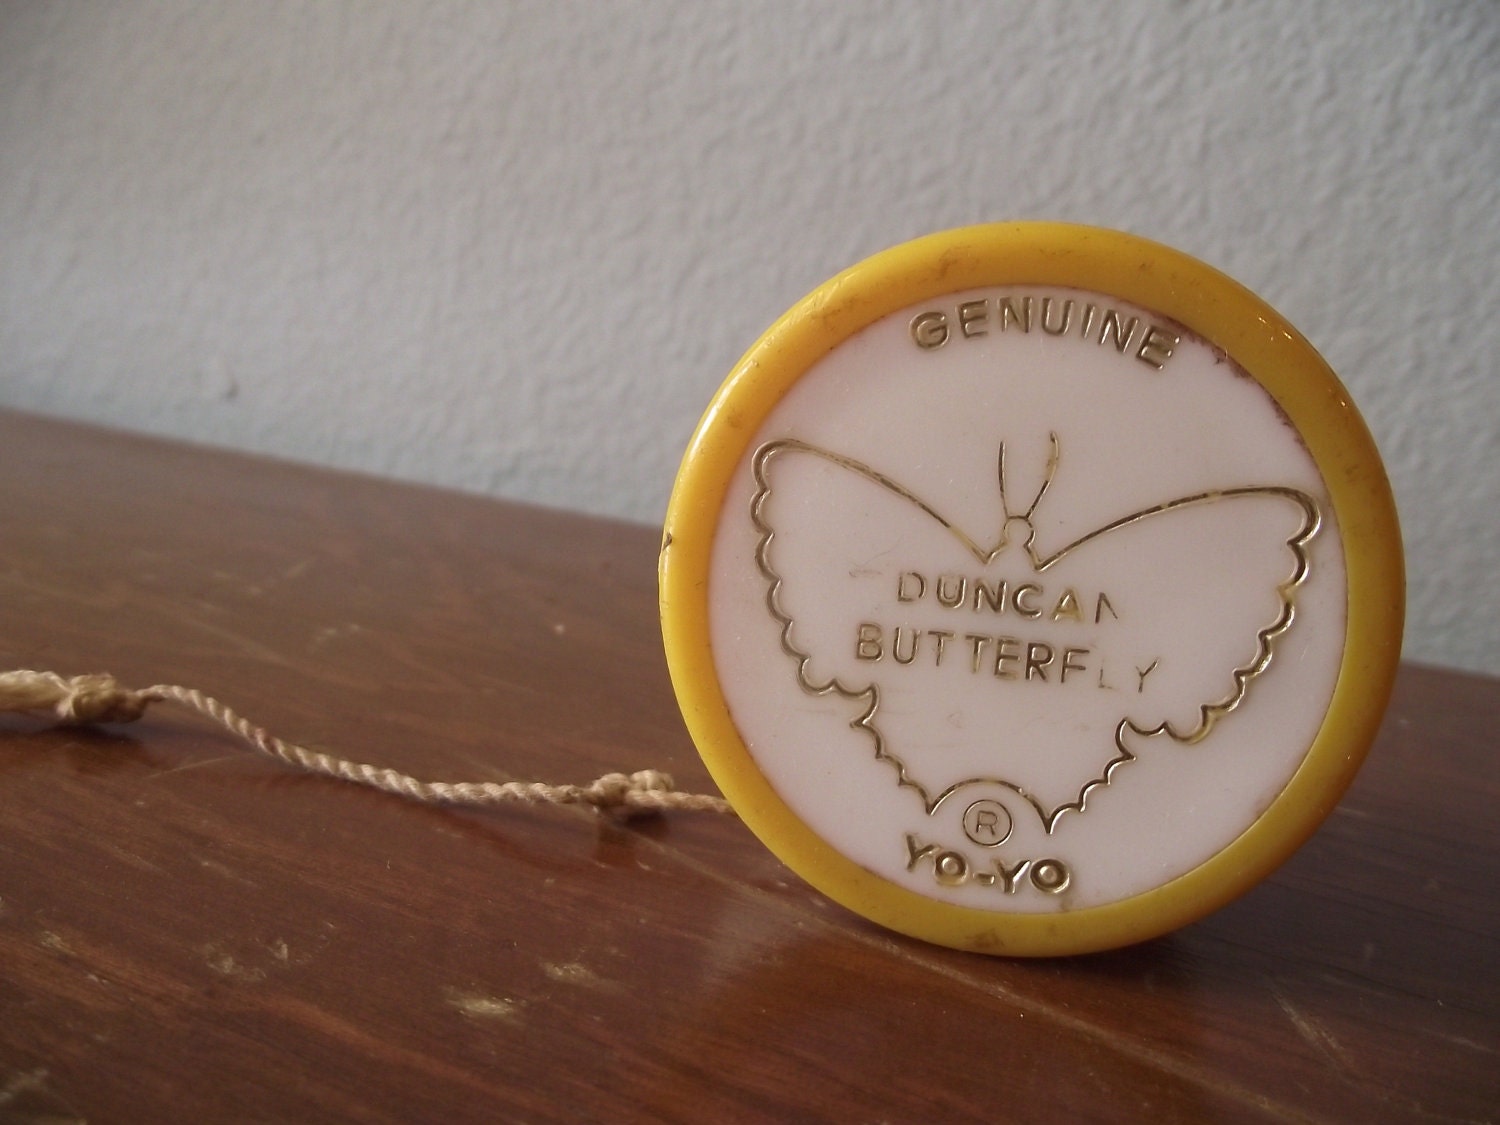 1970s Yellow Duncan Butterfly Yo Yo